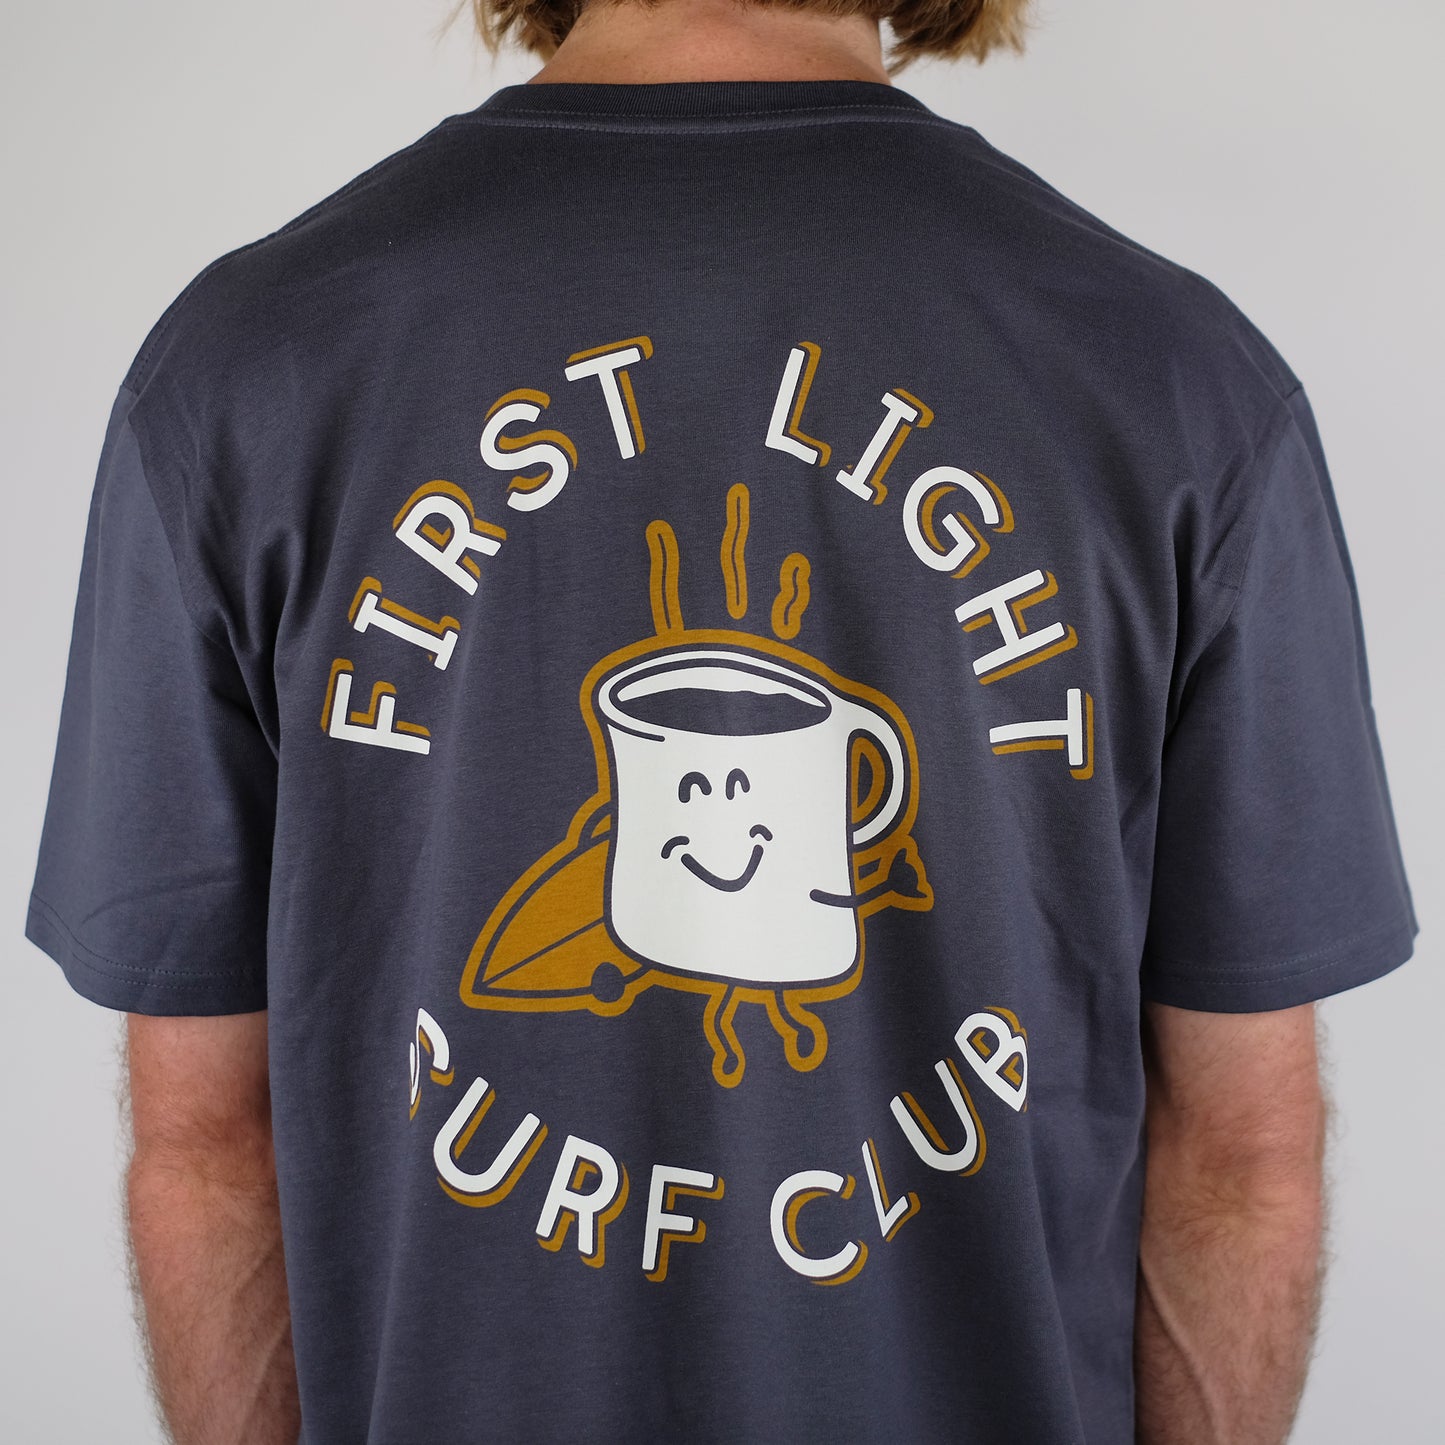 Petrol Blue First Light Surf Club Coffee Mug Surfing Tee Shirt